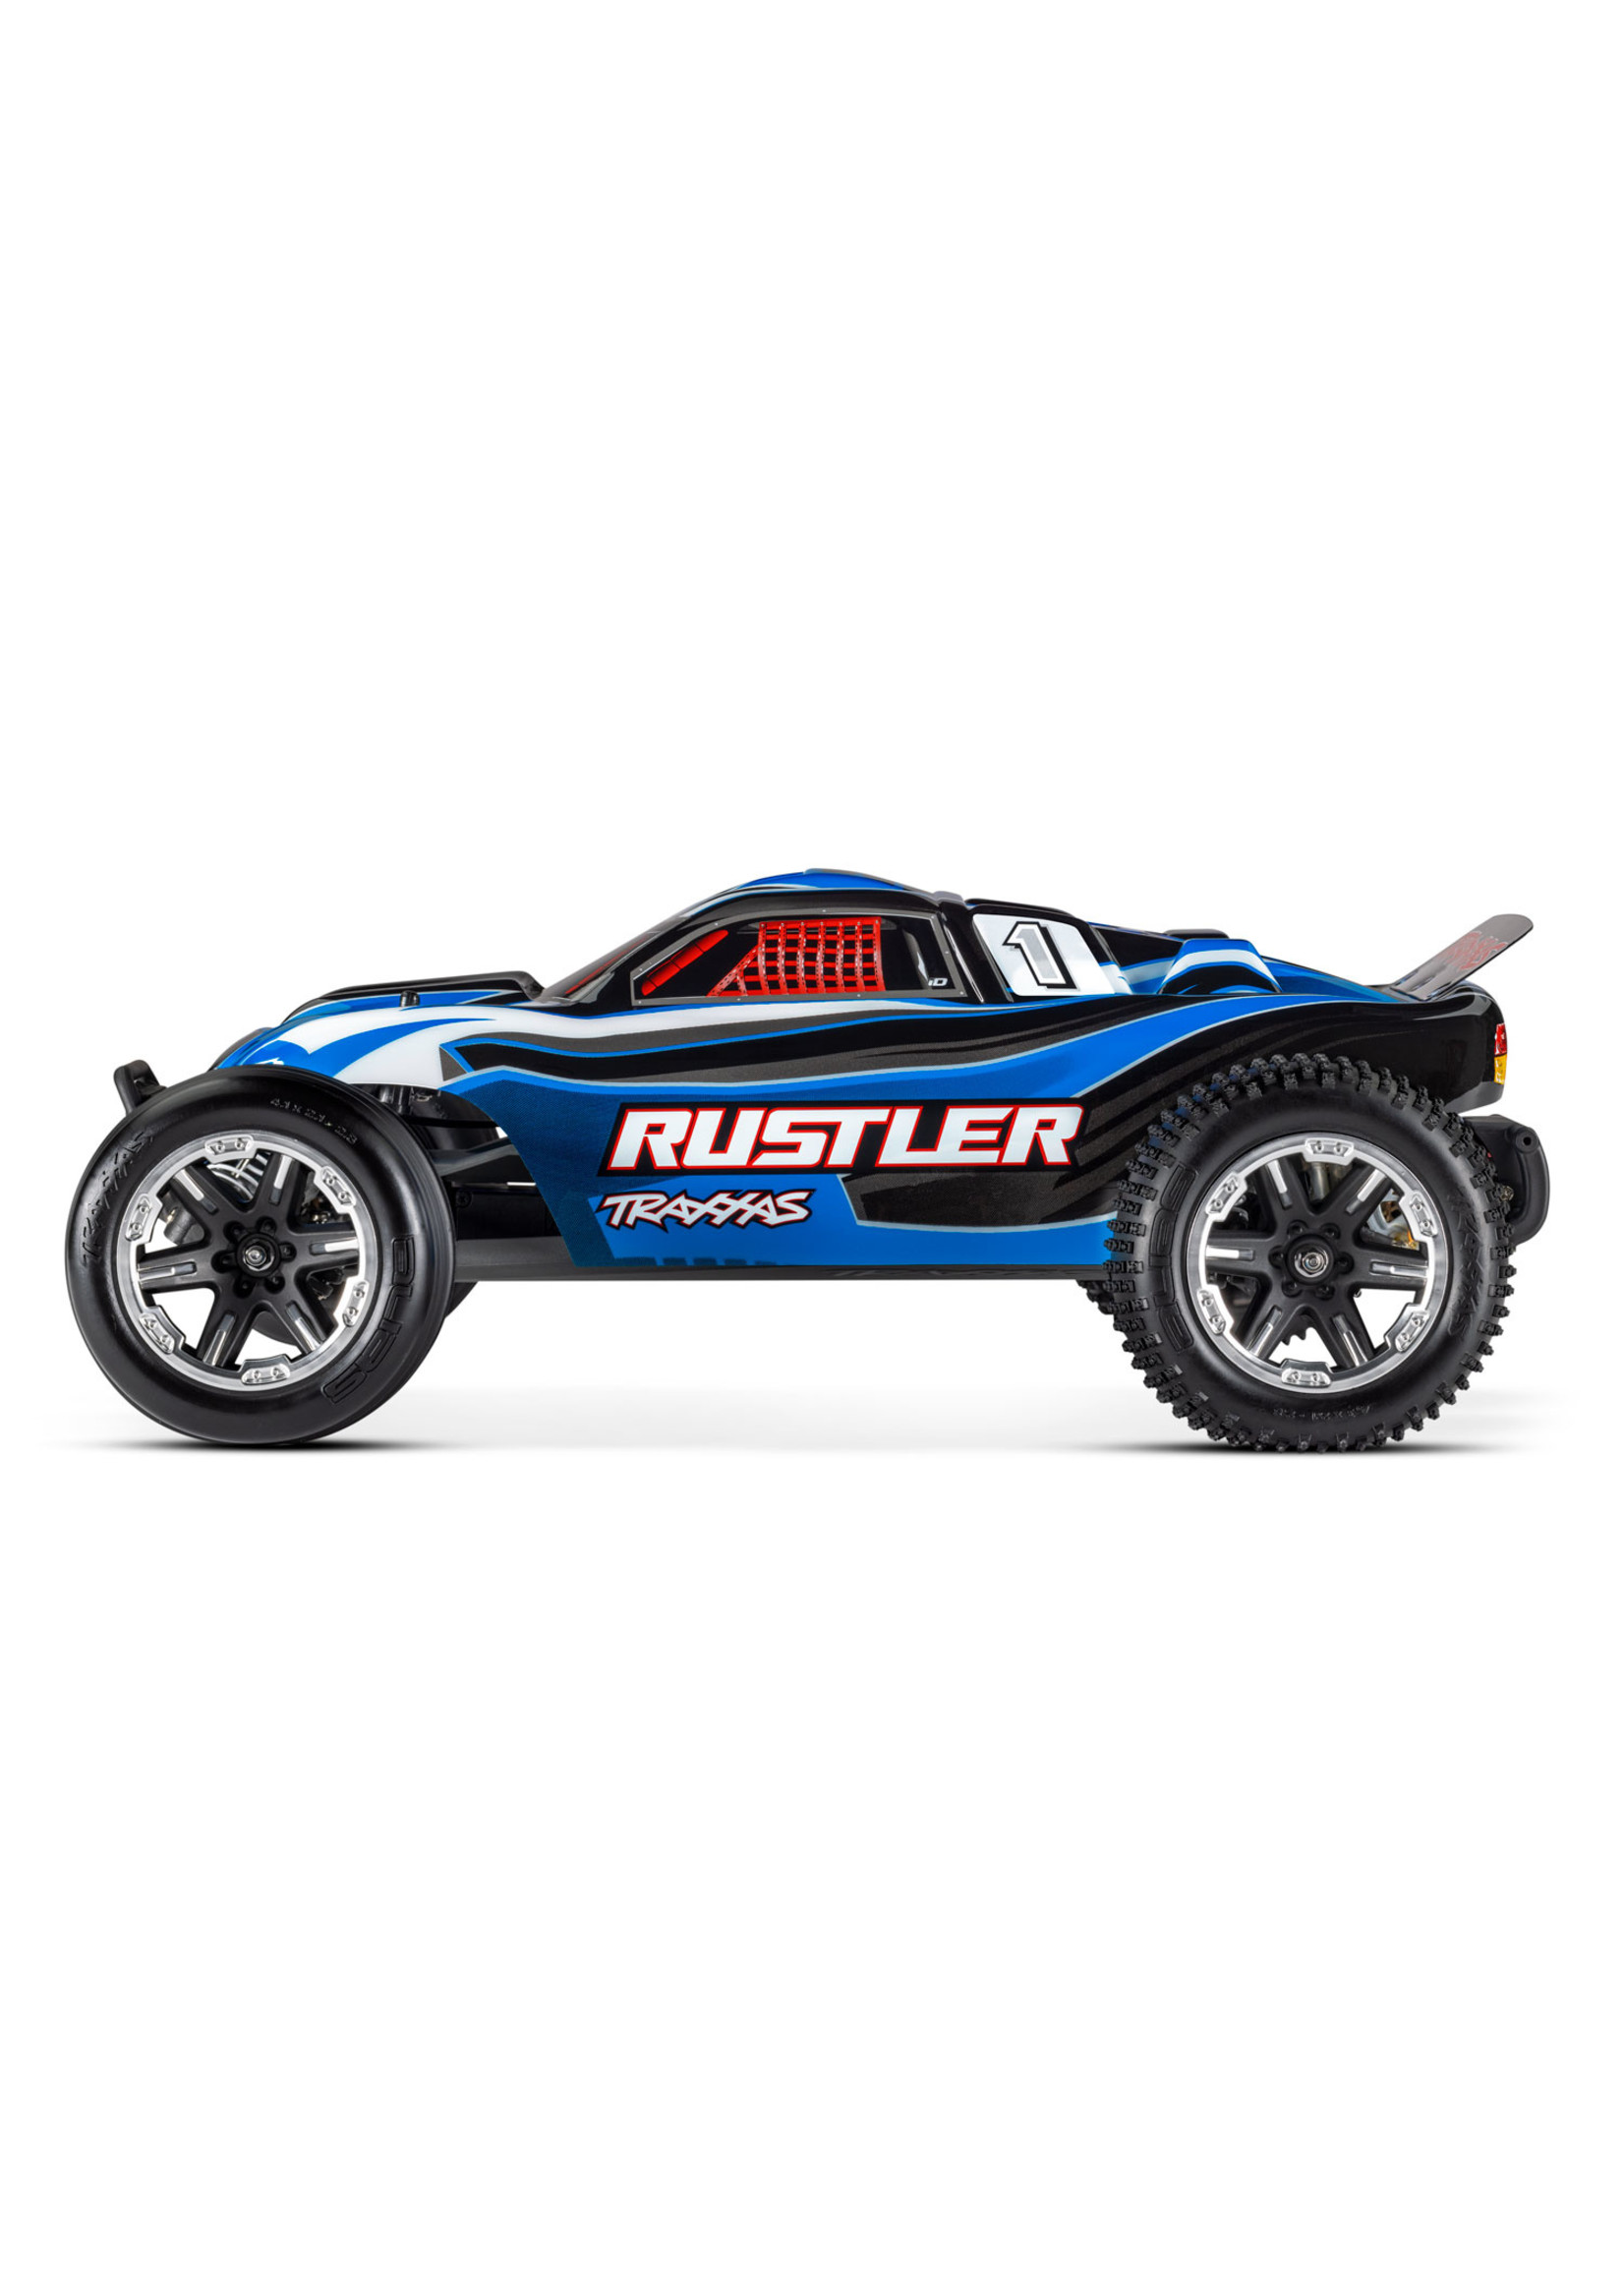 Traxxas 1/10 Rustler 2WD RTR Stadium Truck with Lights - Blue